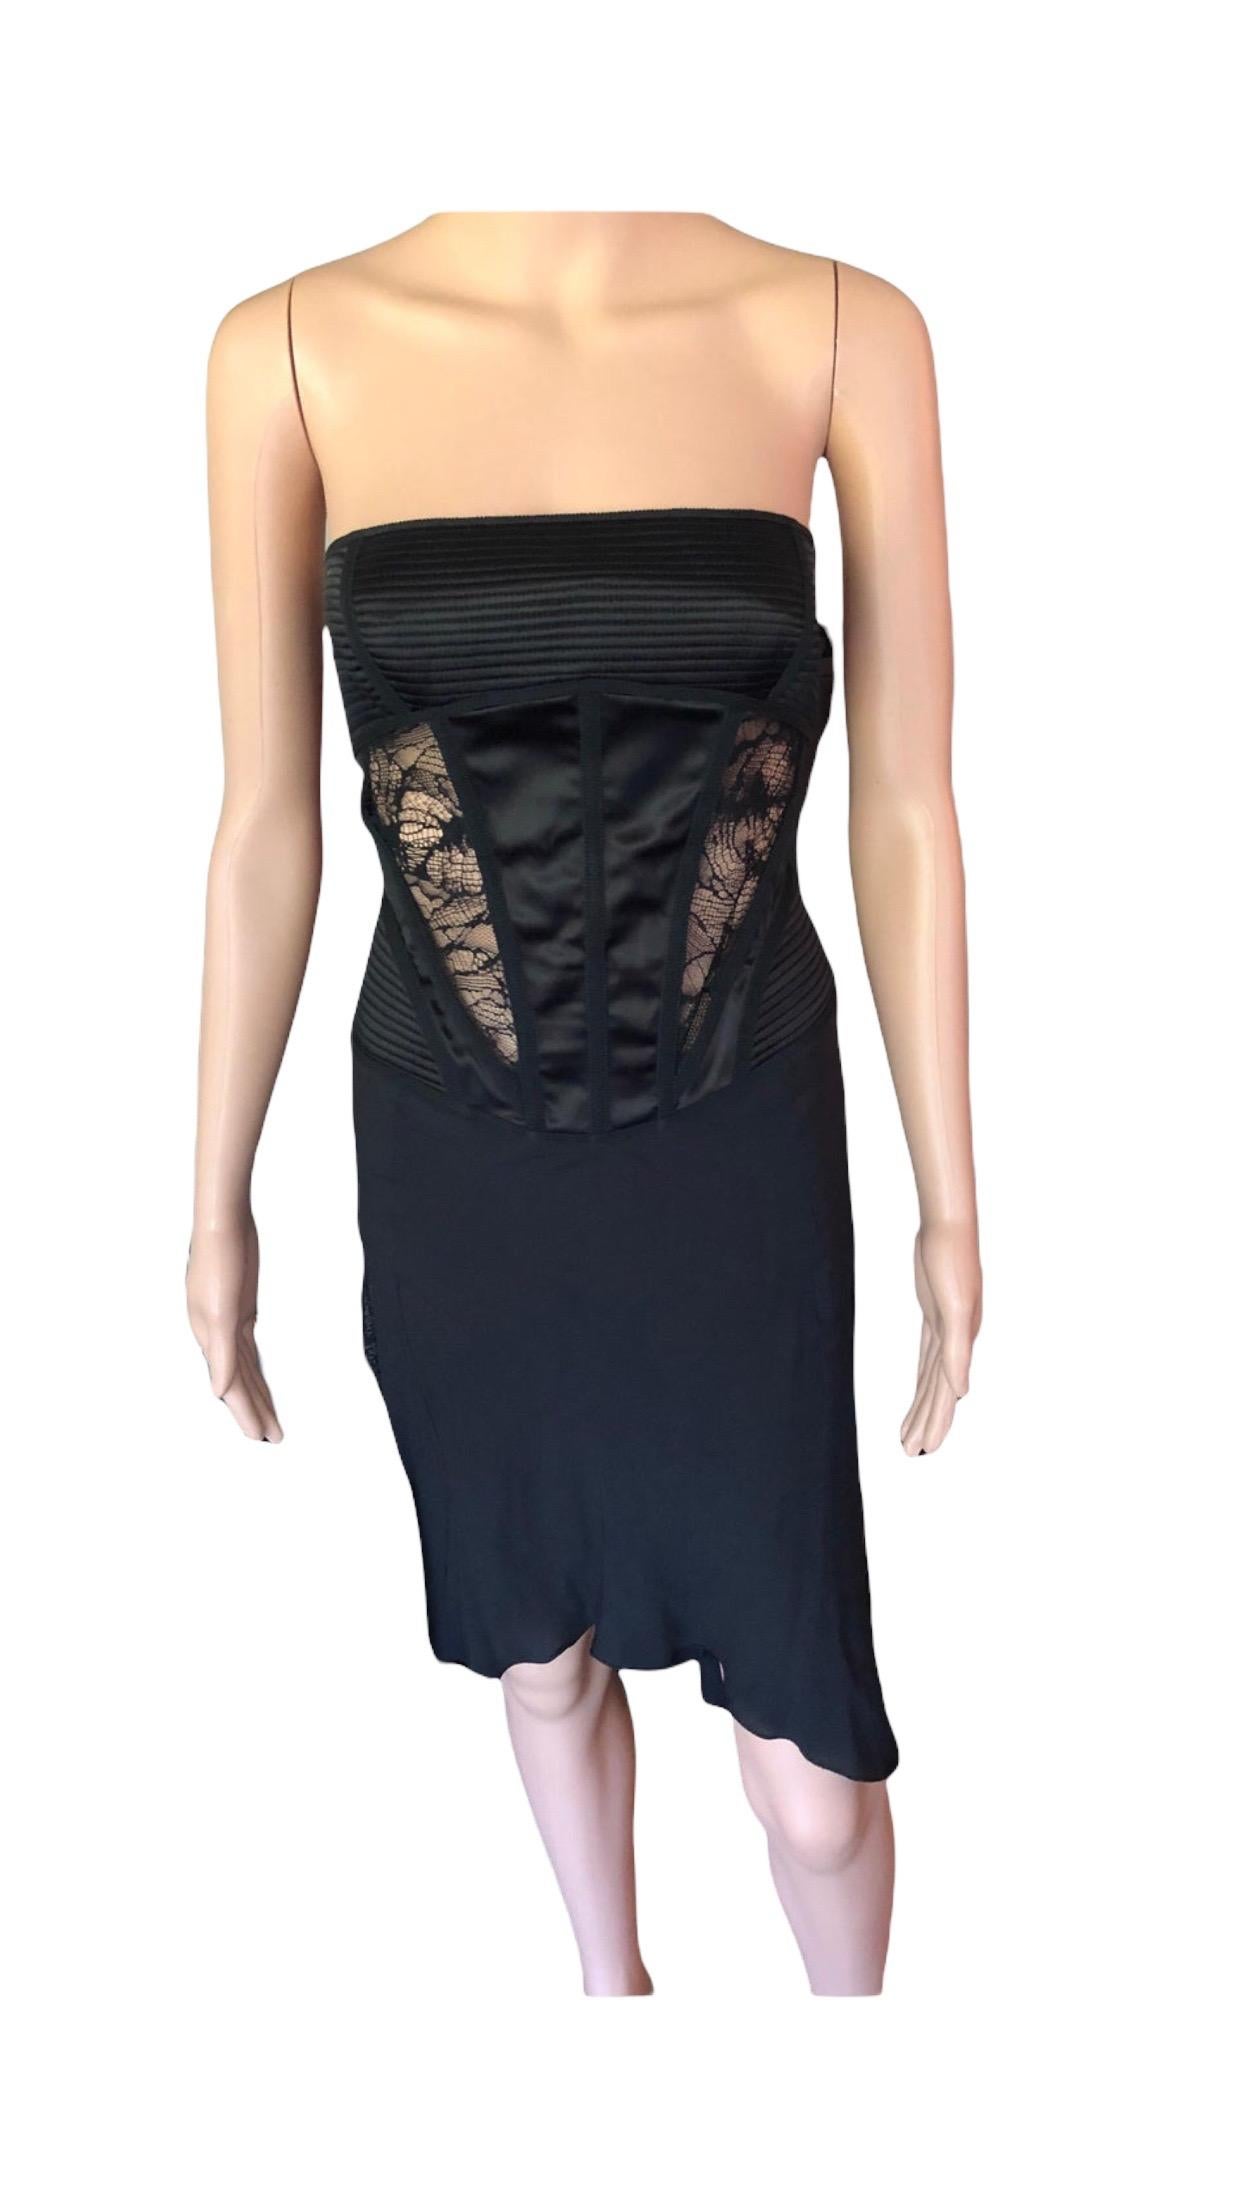 Julien Macdonald Asymmetrical Sheer Lace Panels Black Dress For Sale 4